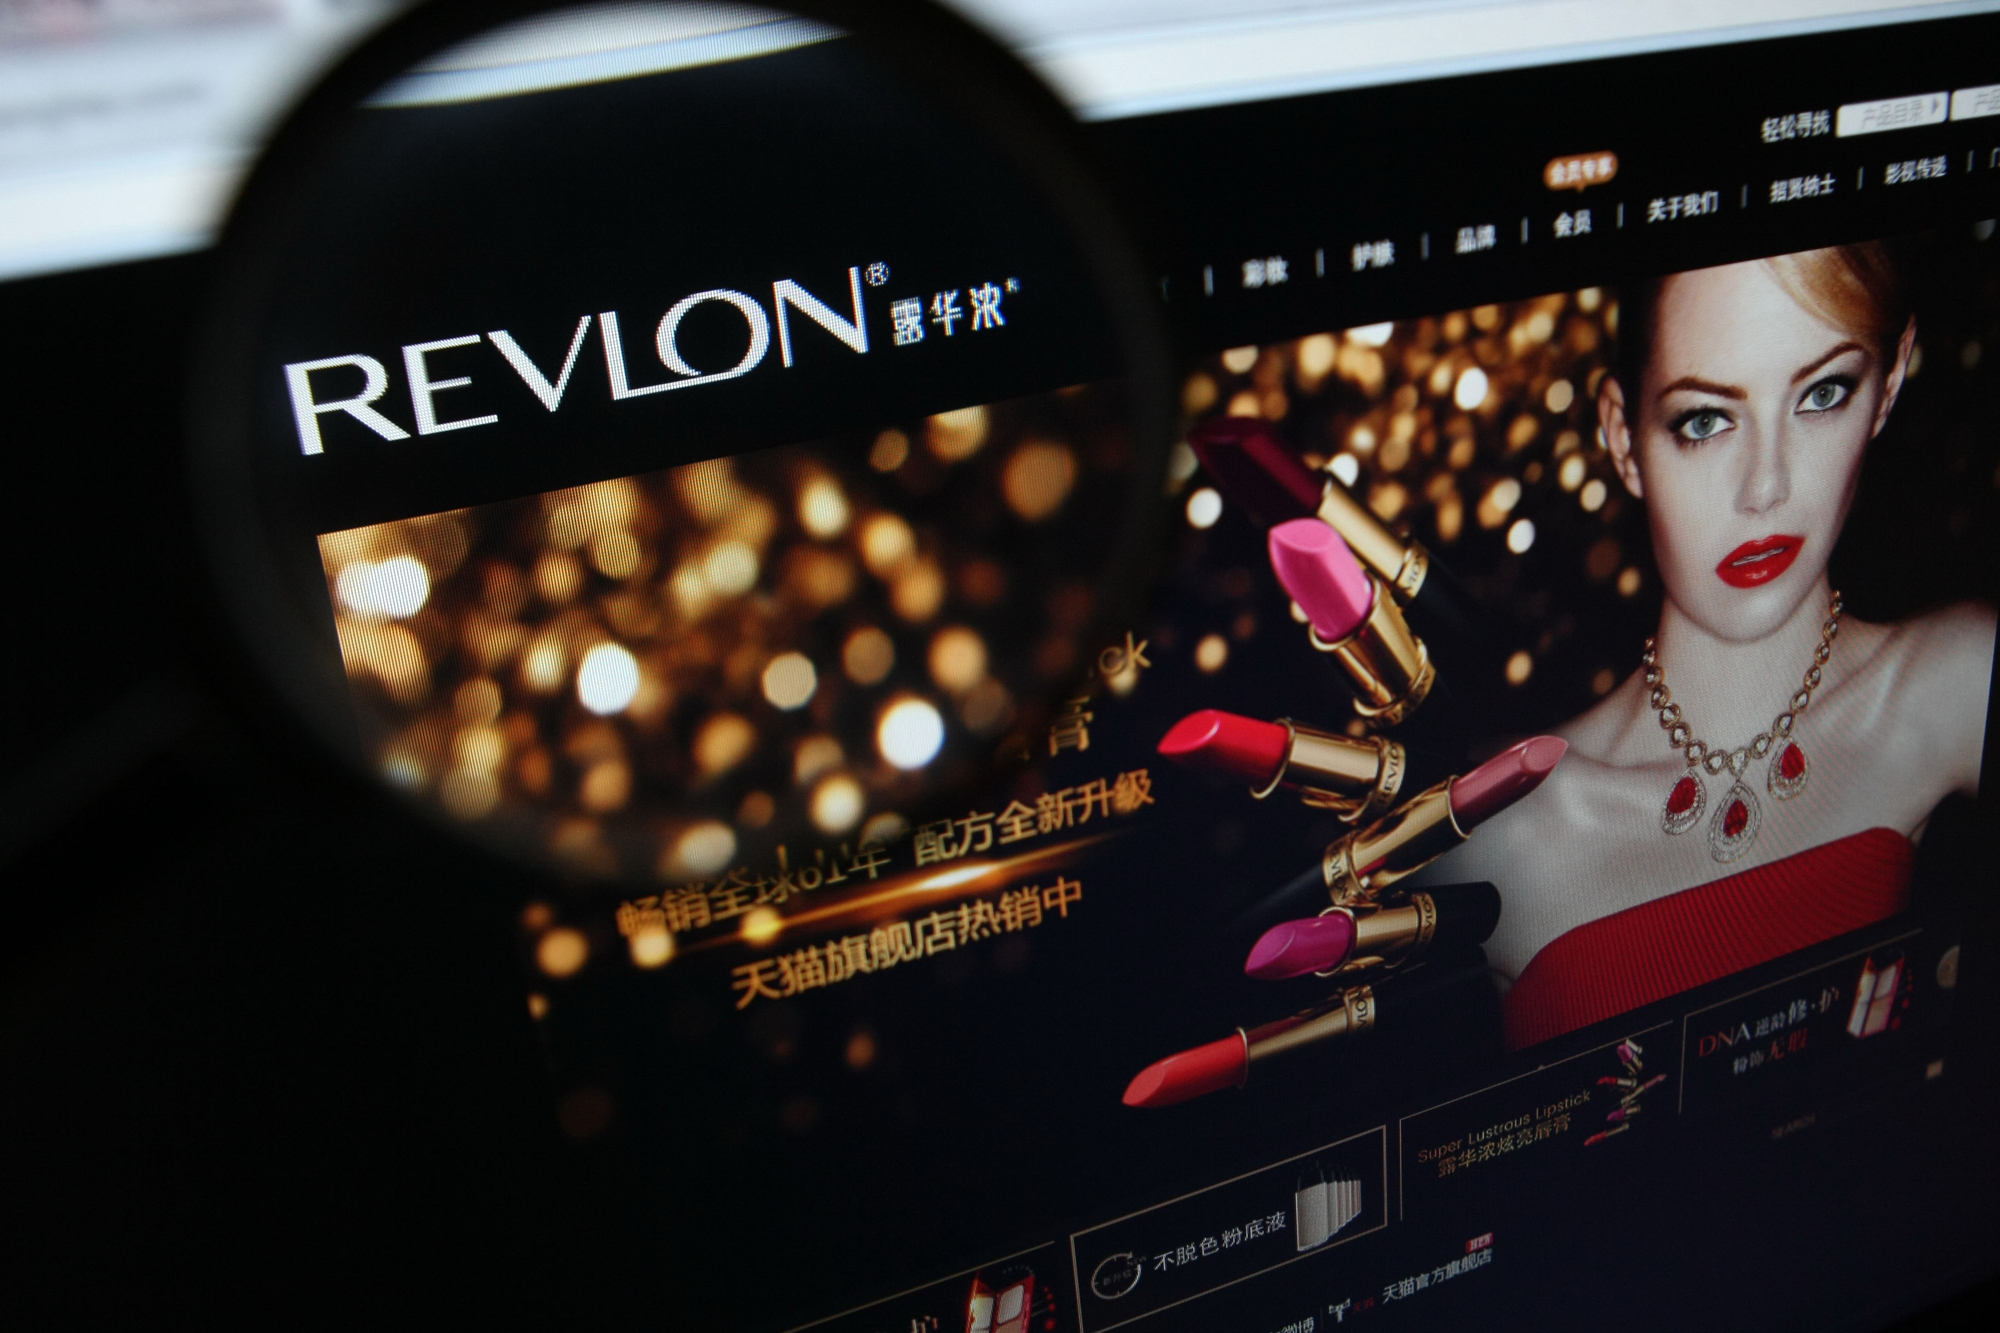 Compañía de cosméticos Revlon se declara en bancarrota - Emprendedor